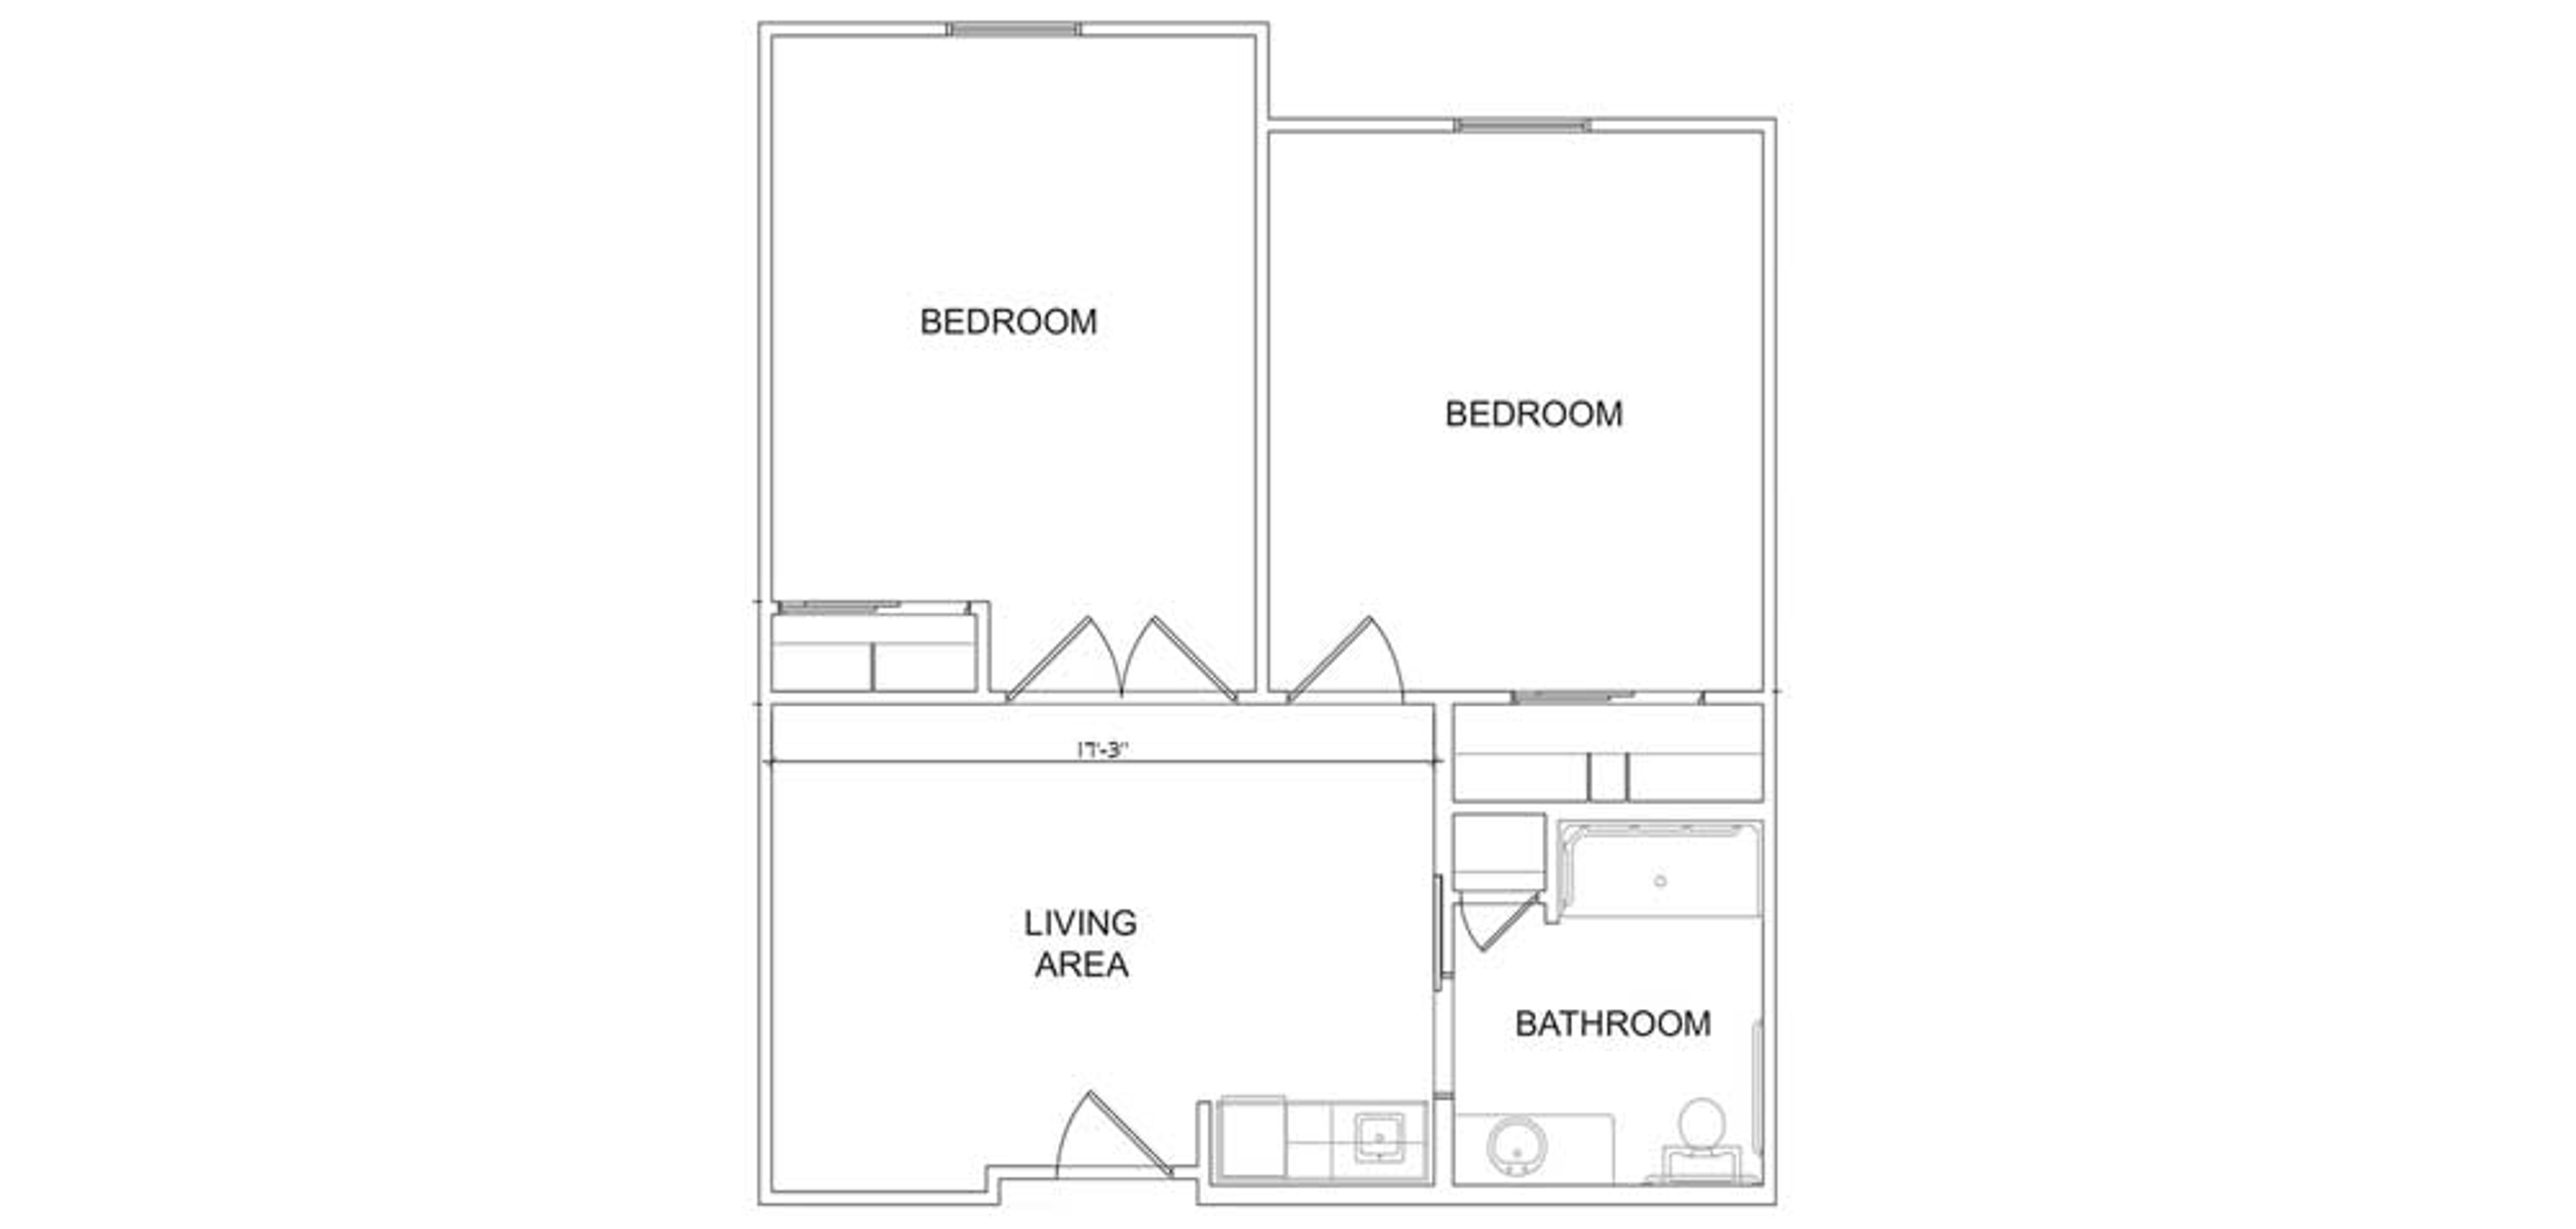 Floorplan - Magnolia Court - 2B 1B Assisted Living